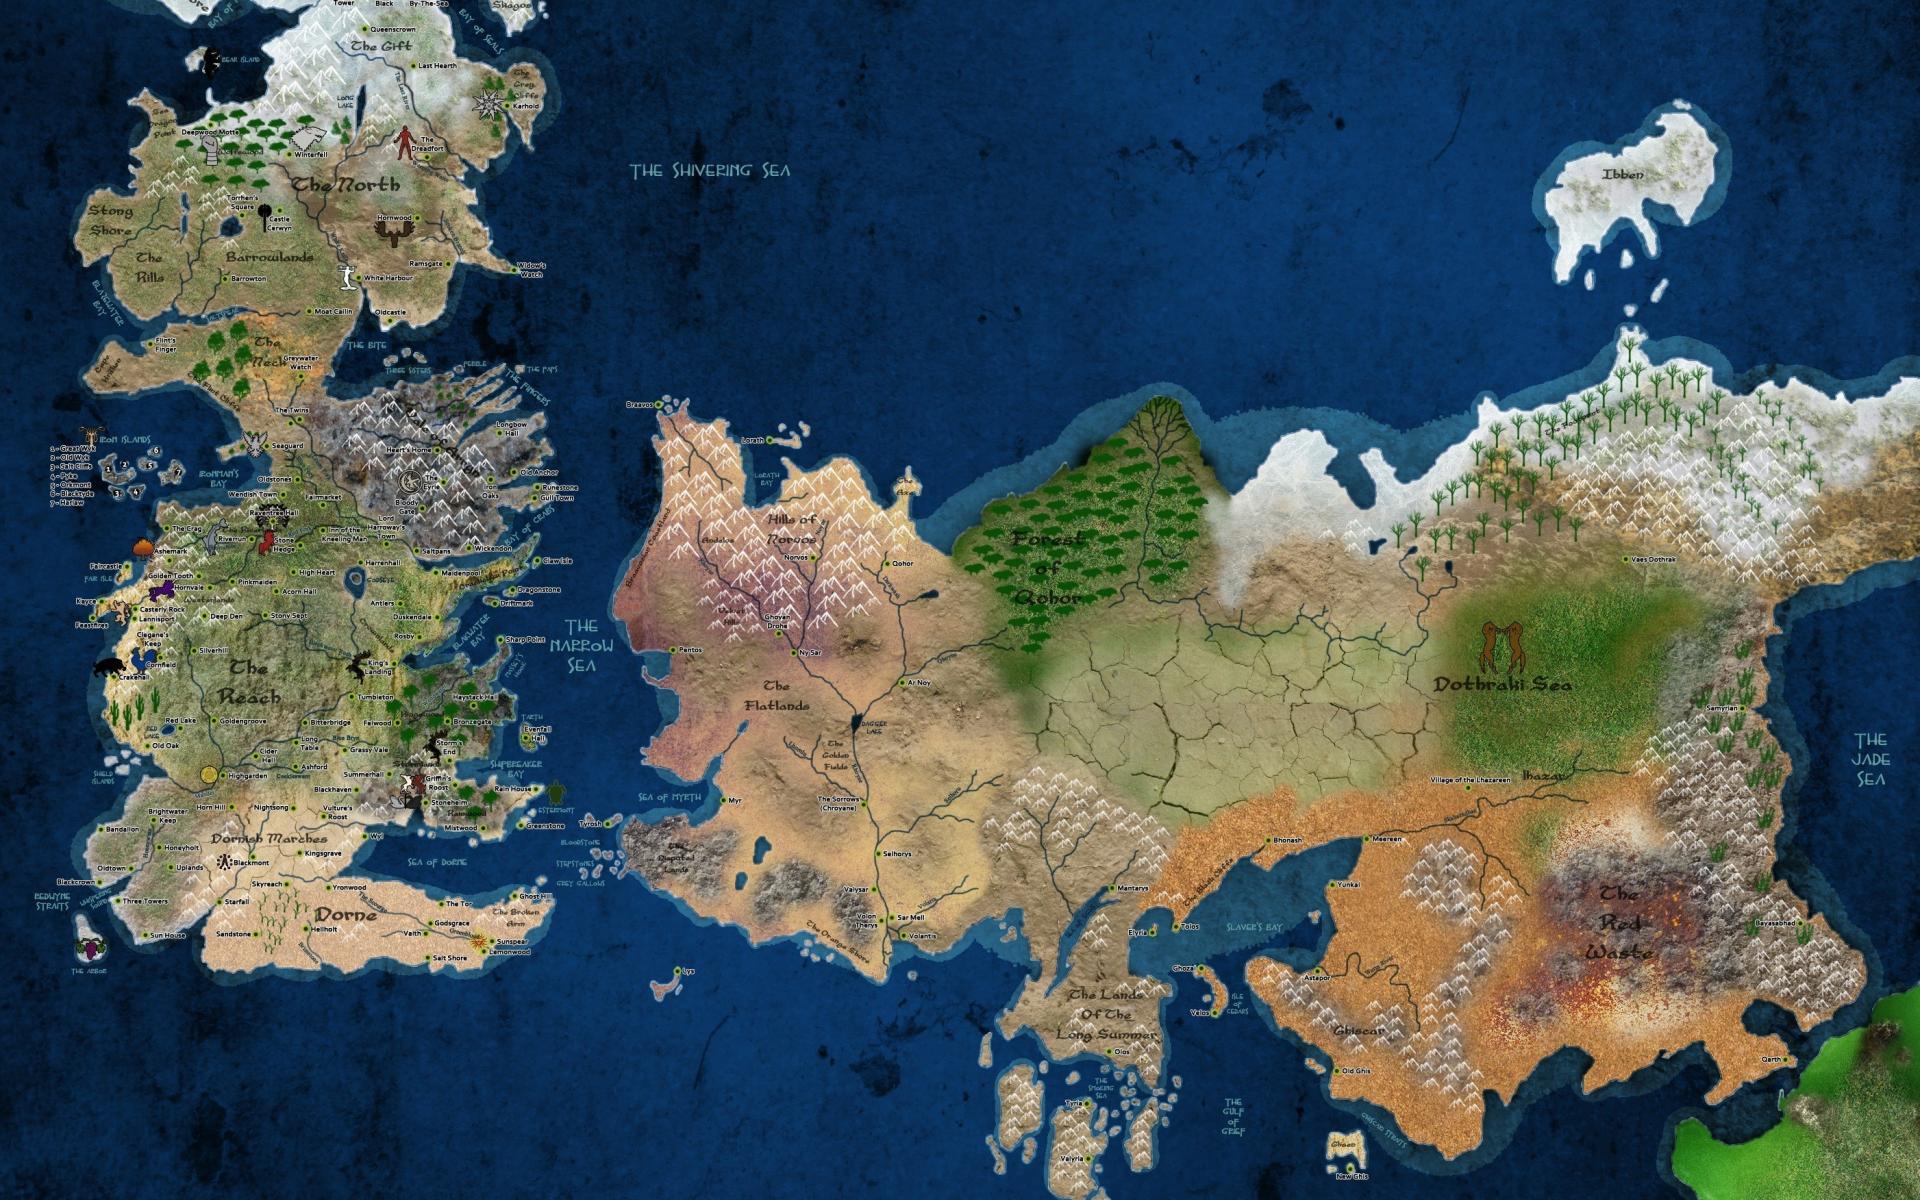 Game Of Thrones Map Desktop Wallpapers Top Free Game Of Thrones Map